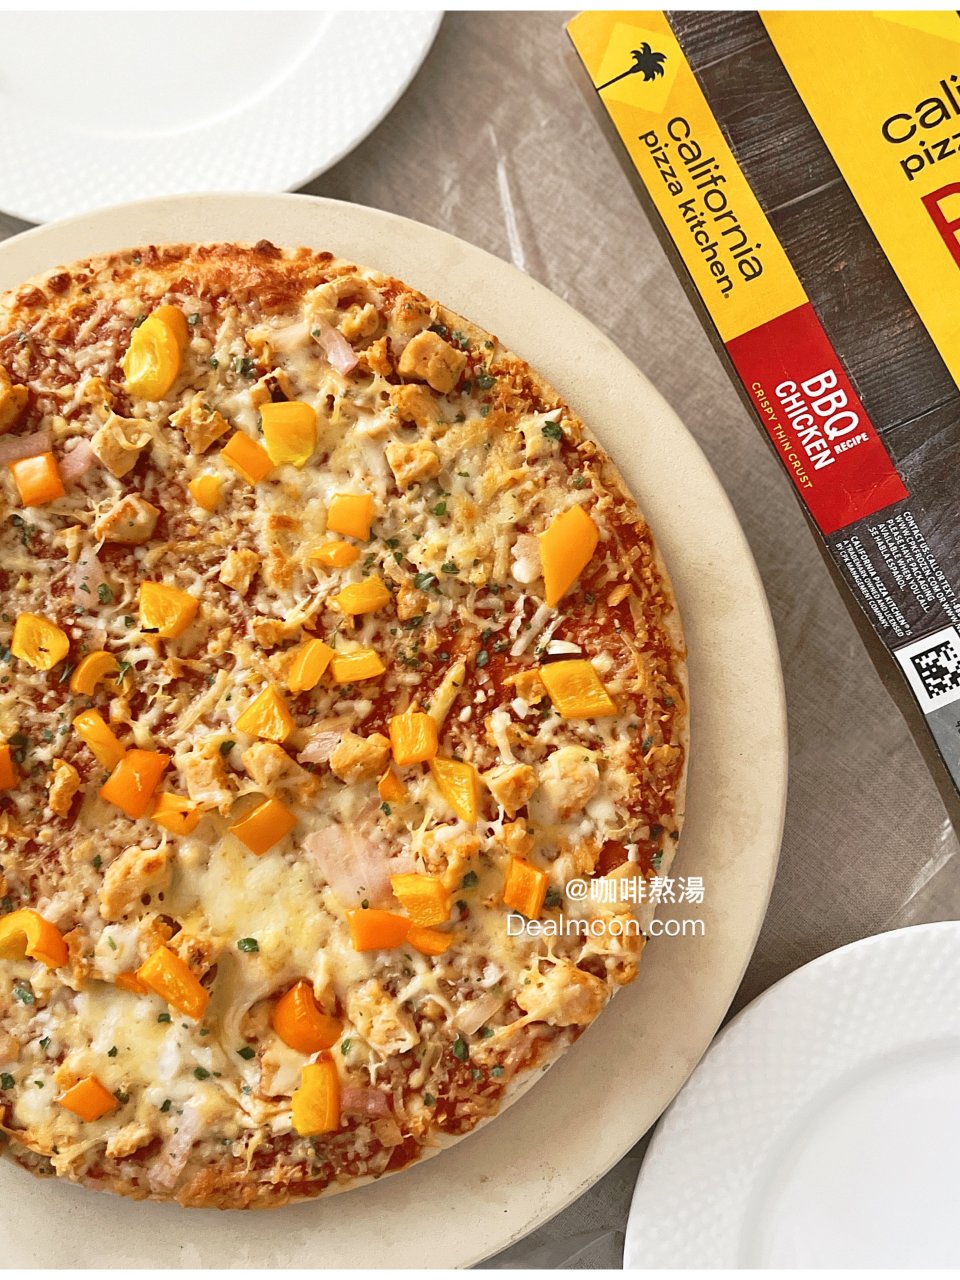 California Pizza Kitchen Thin Crust Bbq Recipe Chicken Frozen Pizza - 14.7oz : Target